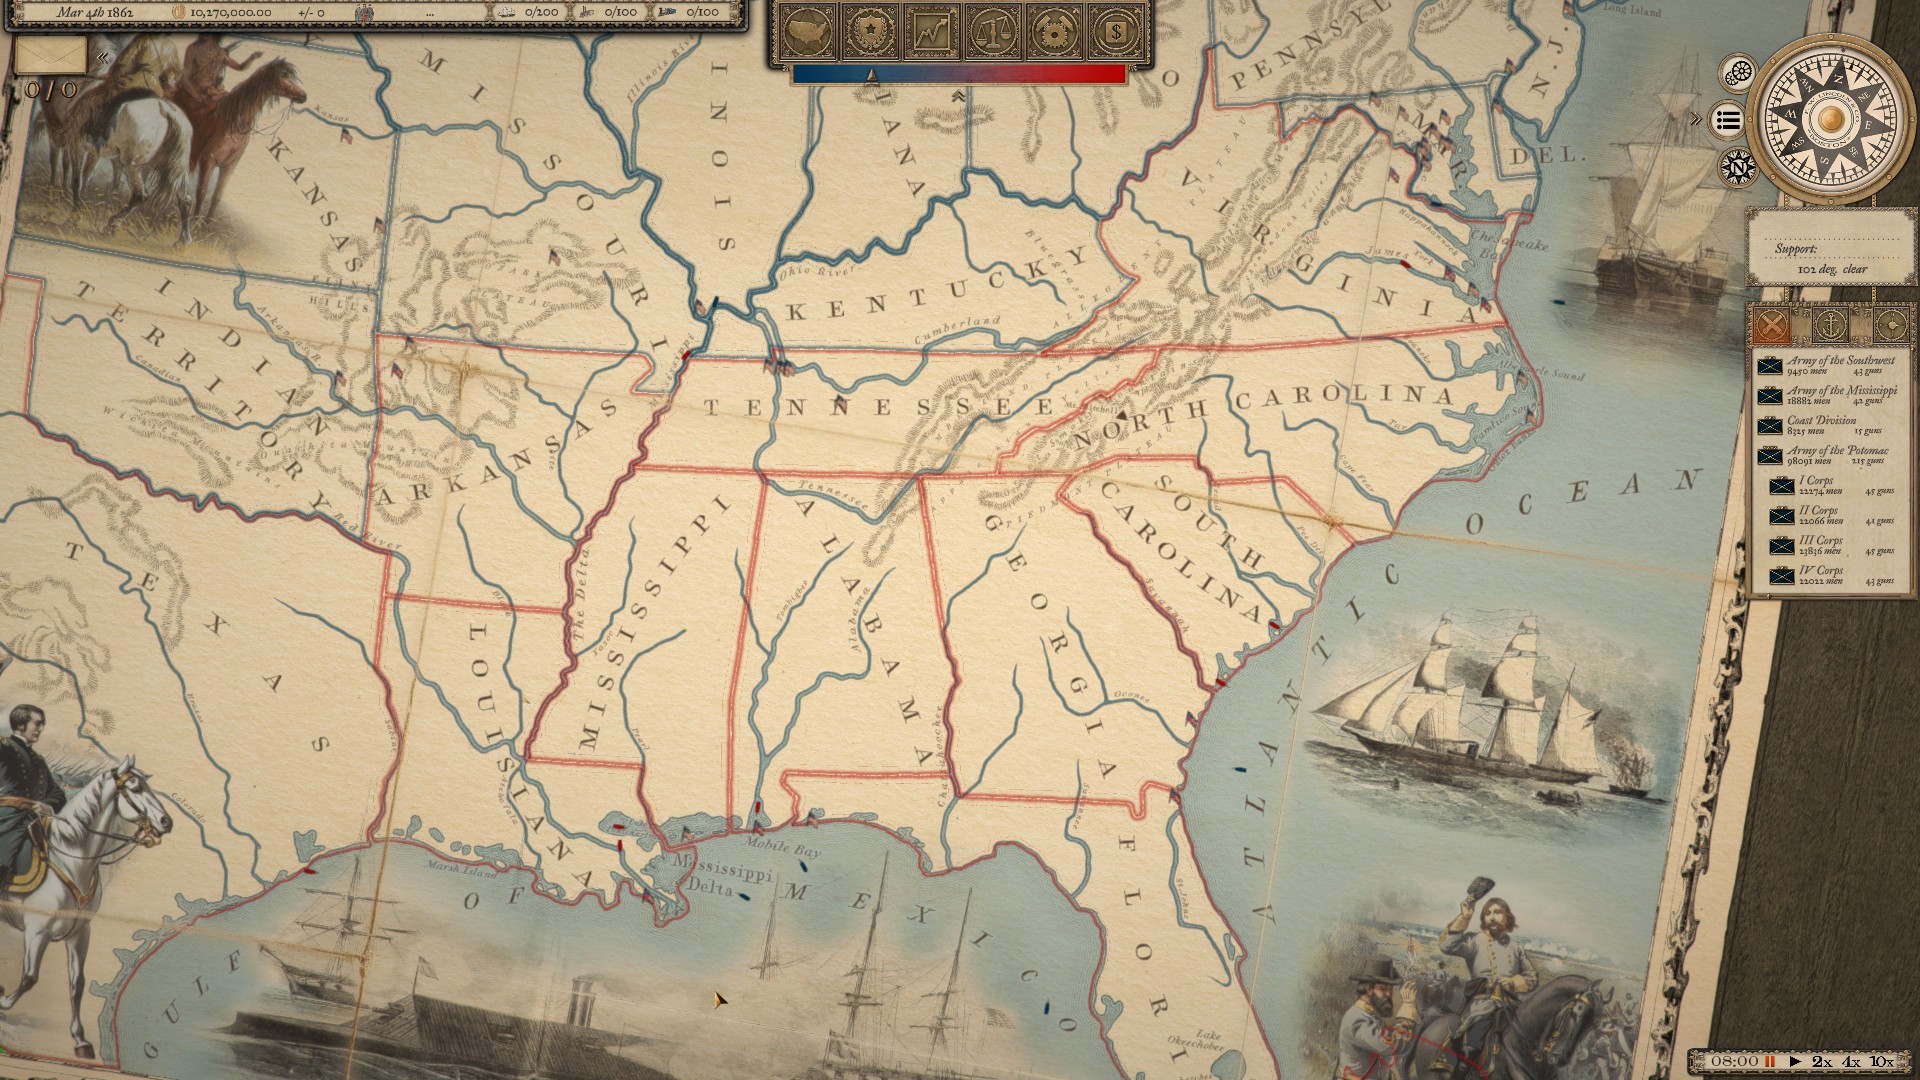 Grand Tactician: The Civil War (1861-1865) Free Download